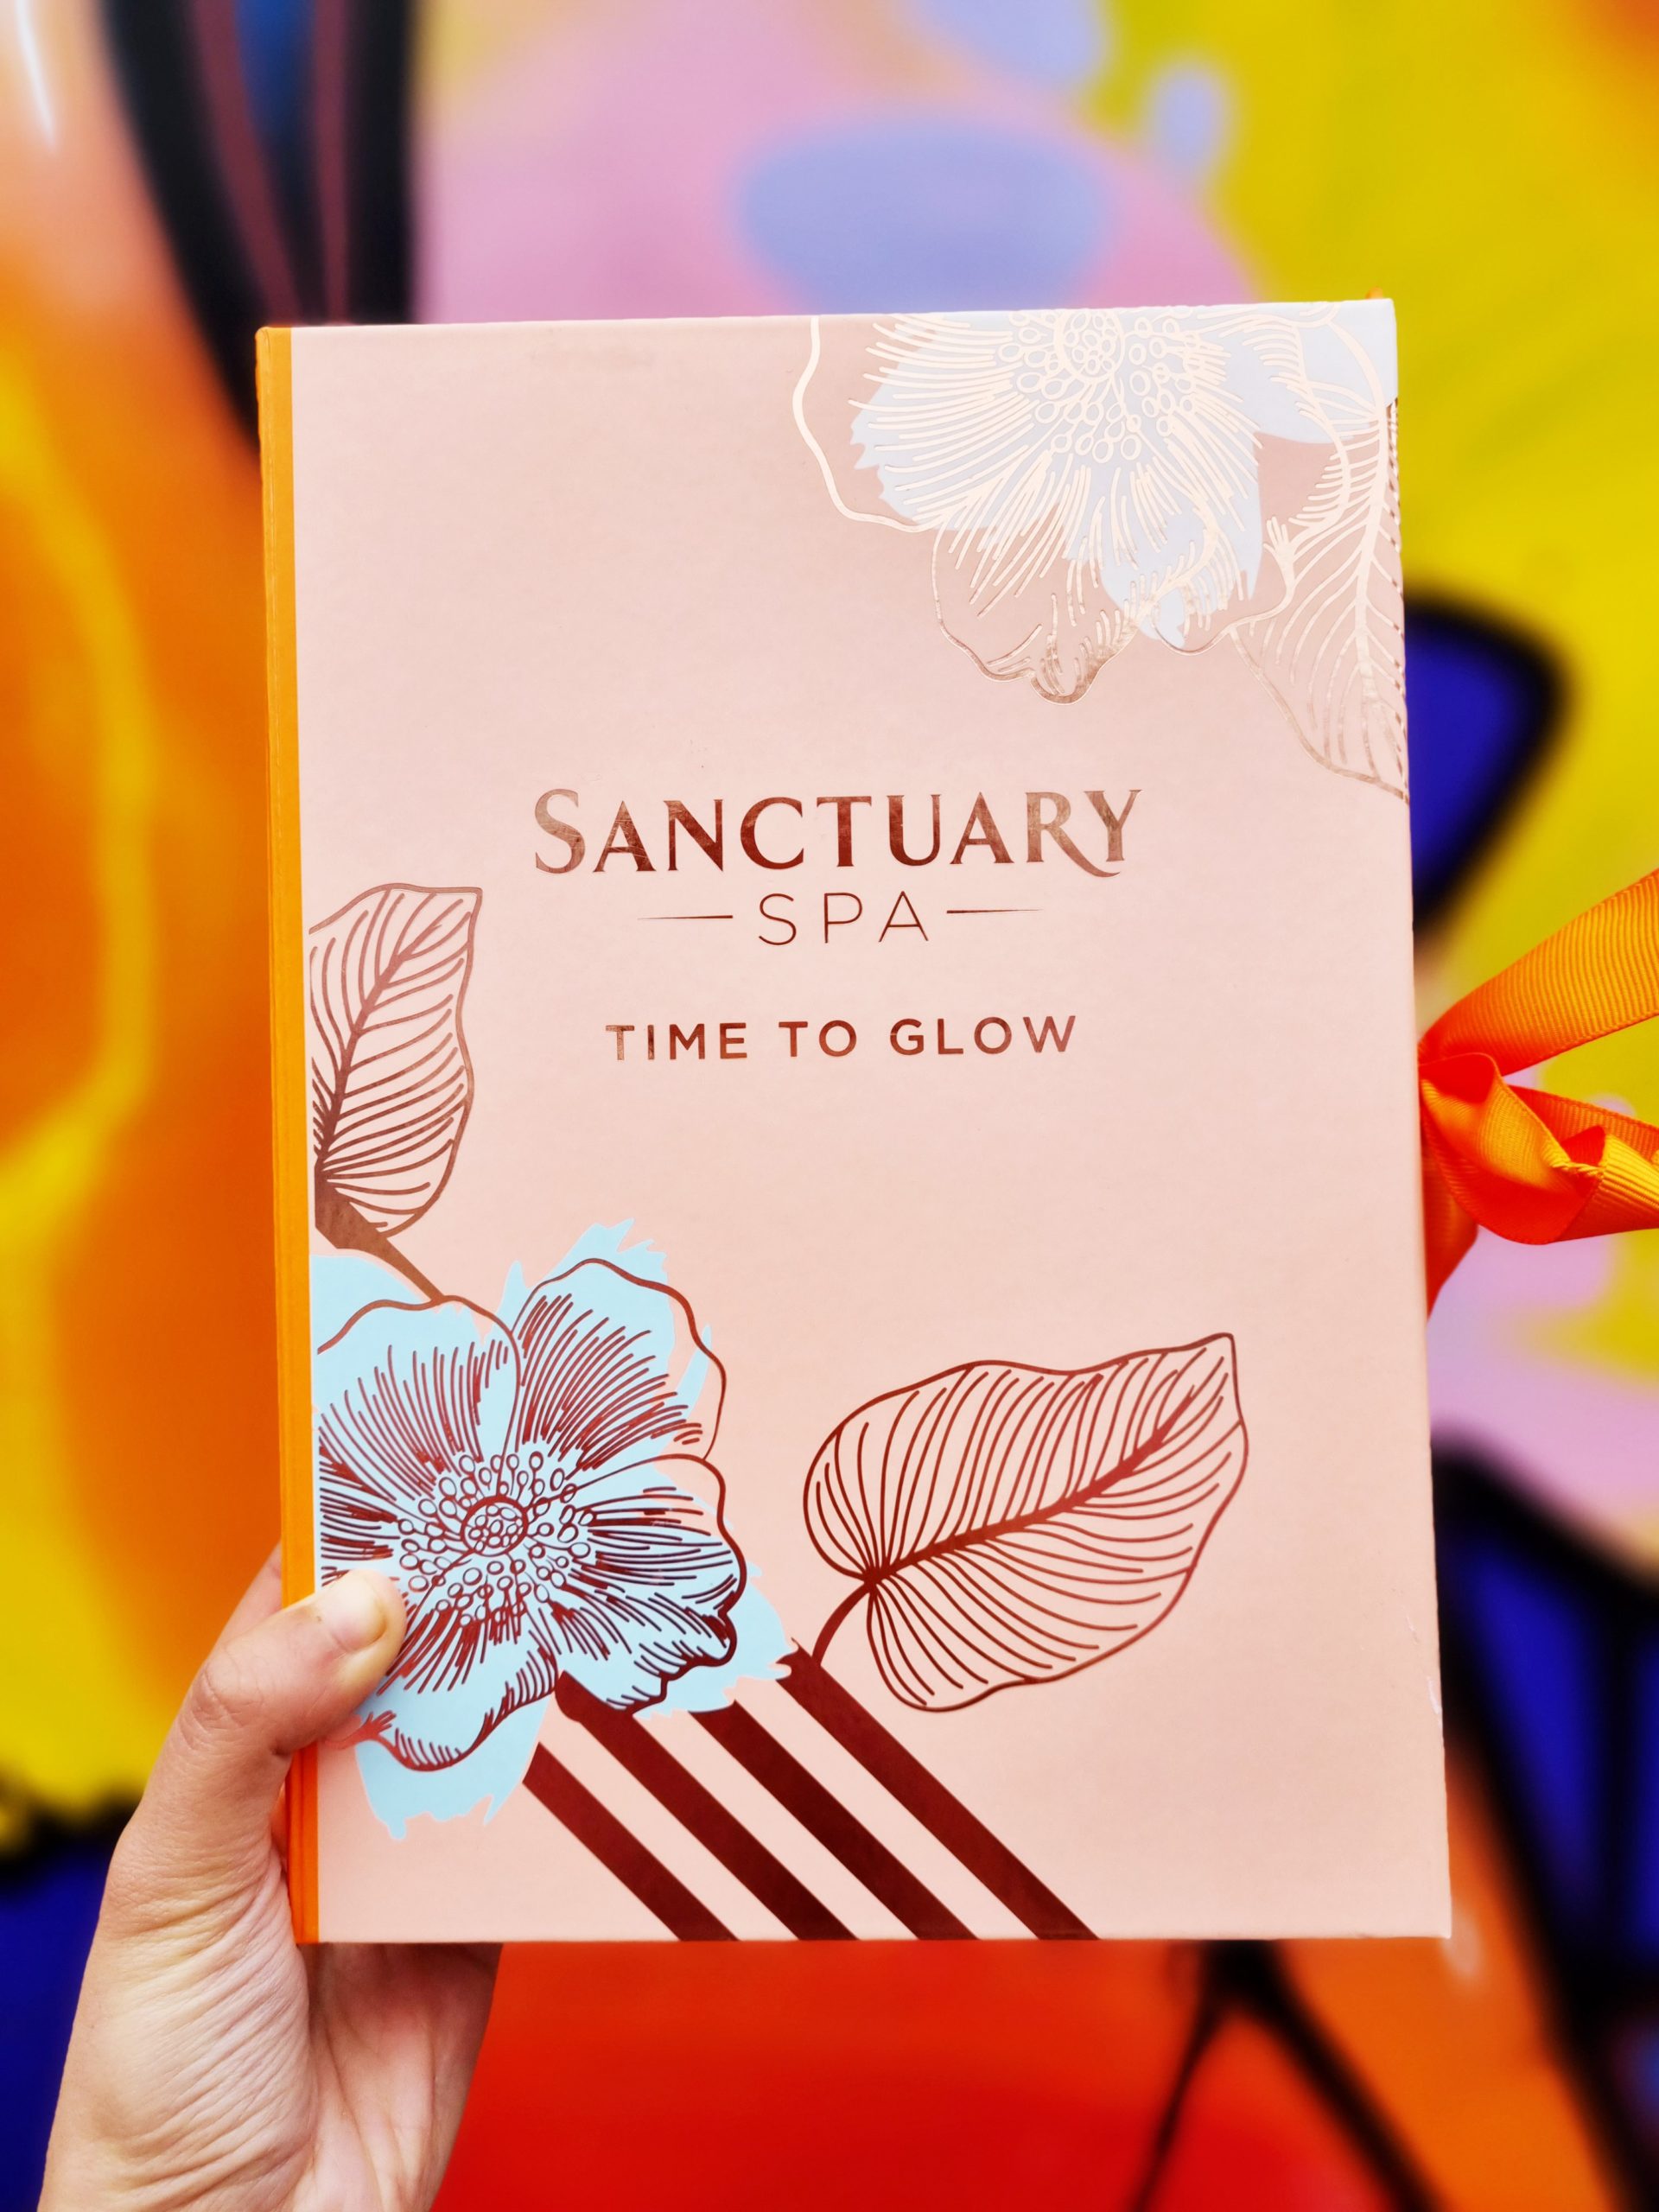 <img src="sanctuary.jpg" alt="sanctuary spa time to glow"/> 